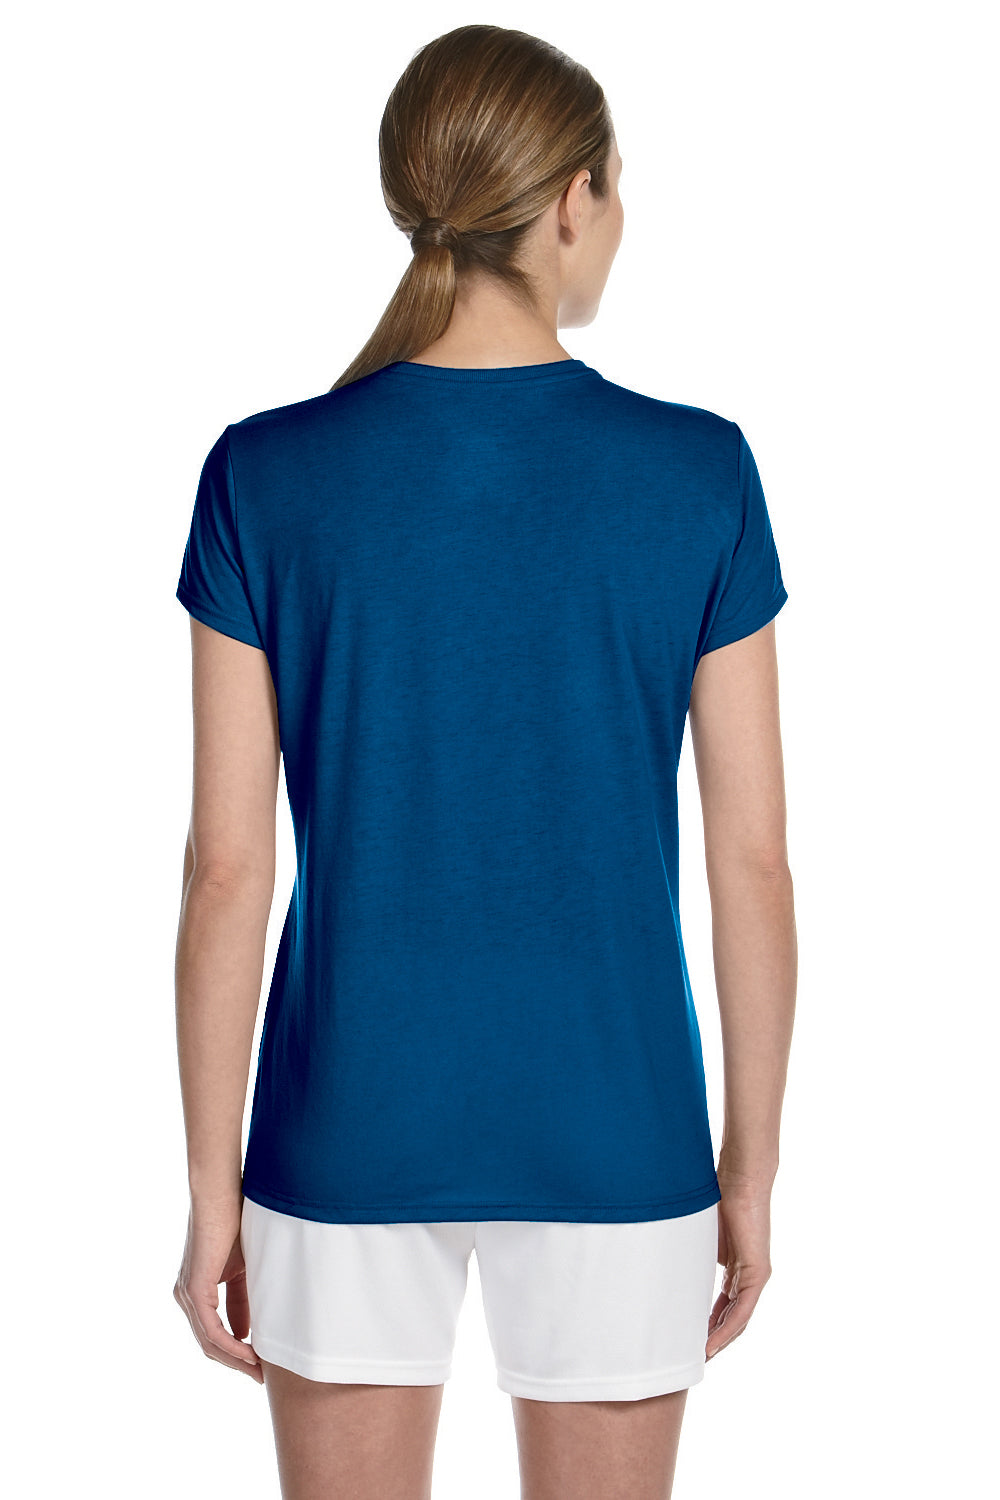 Gildan G420L Womens Performance Jersey Moisture Wicking Short Sleeve Crewneck T-Shirt Royal Blue Back